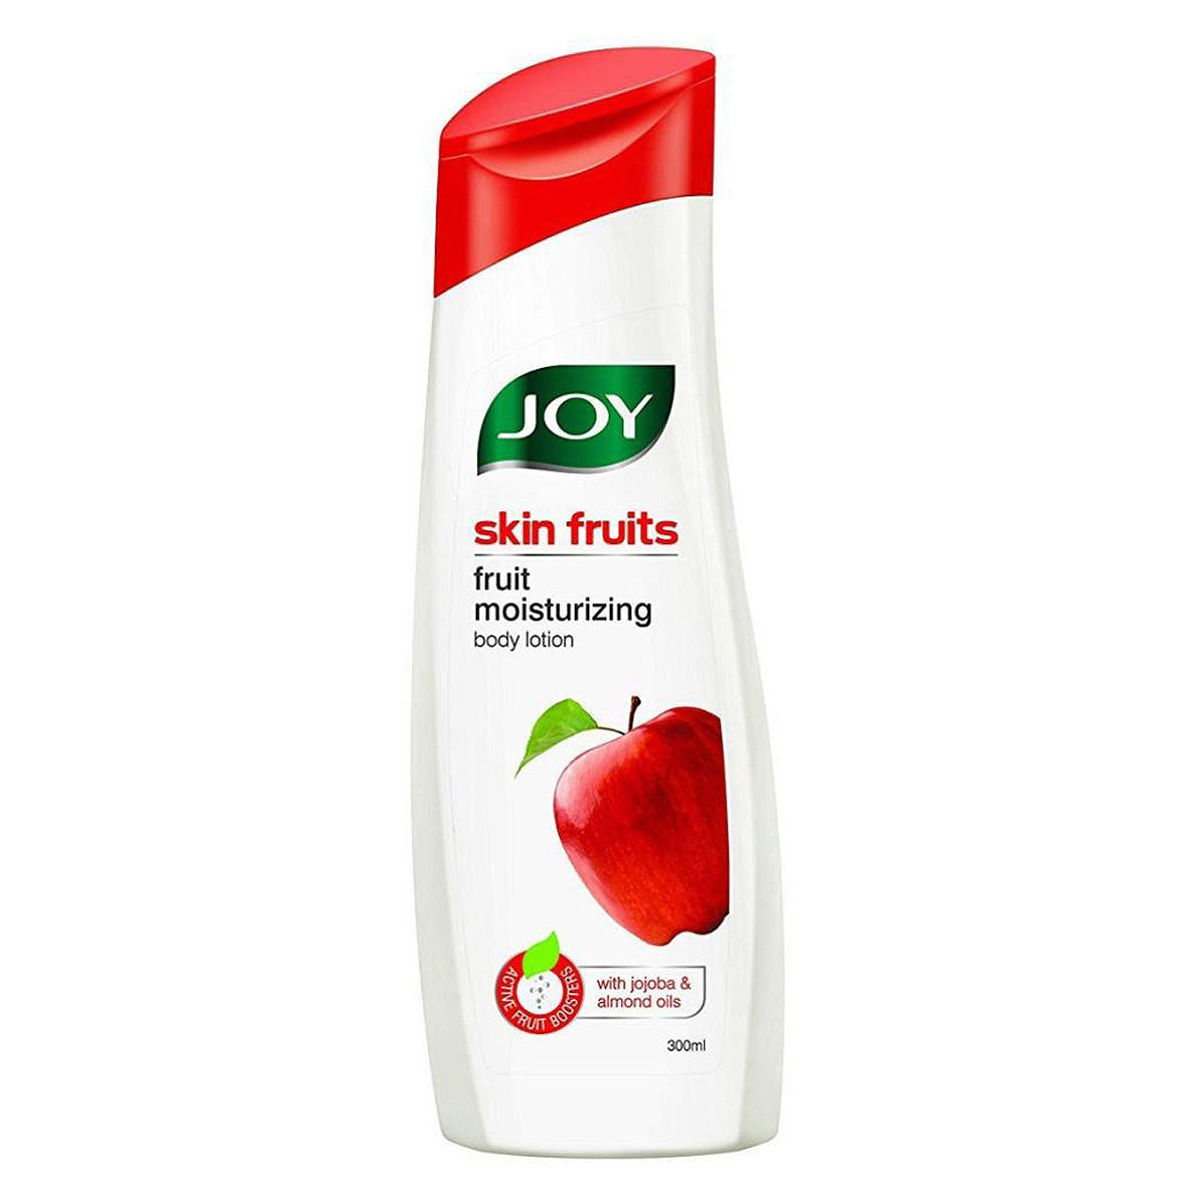 Joy Skin Fruits Moisturizing Body Lotion, 300 ml, Pack of 1 